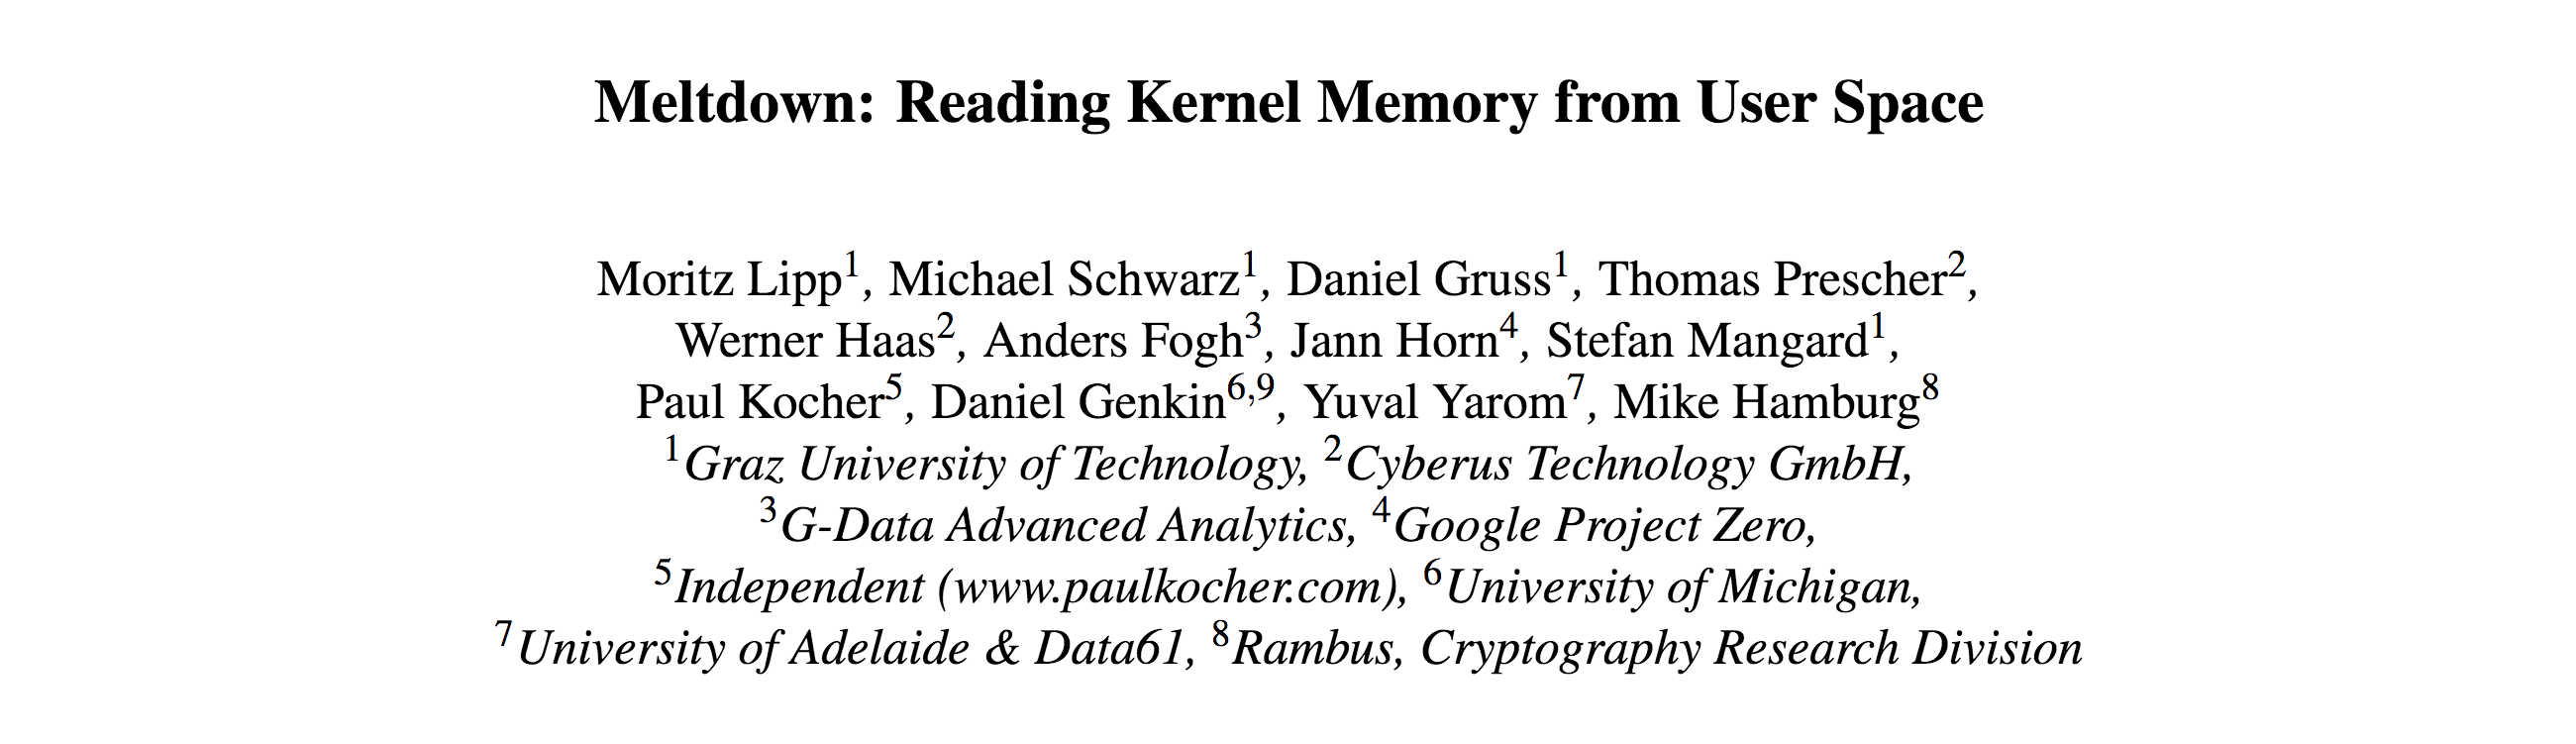 Meltdown: Reading Kernel Memory from User Space.